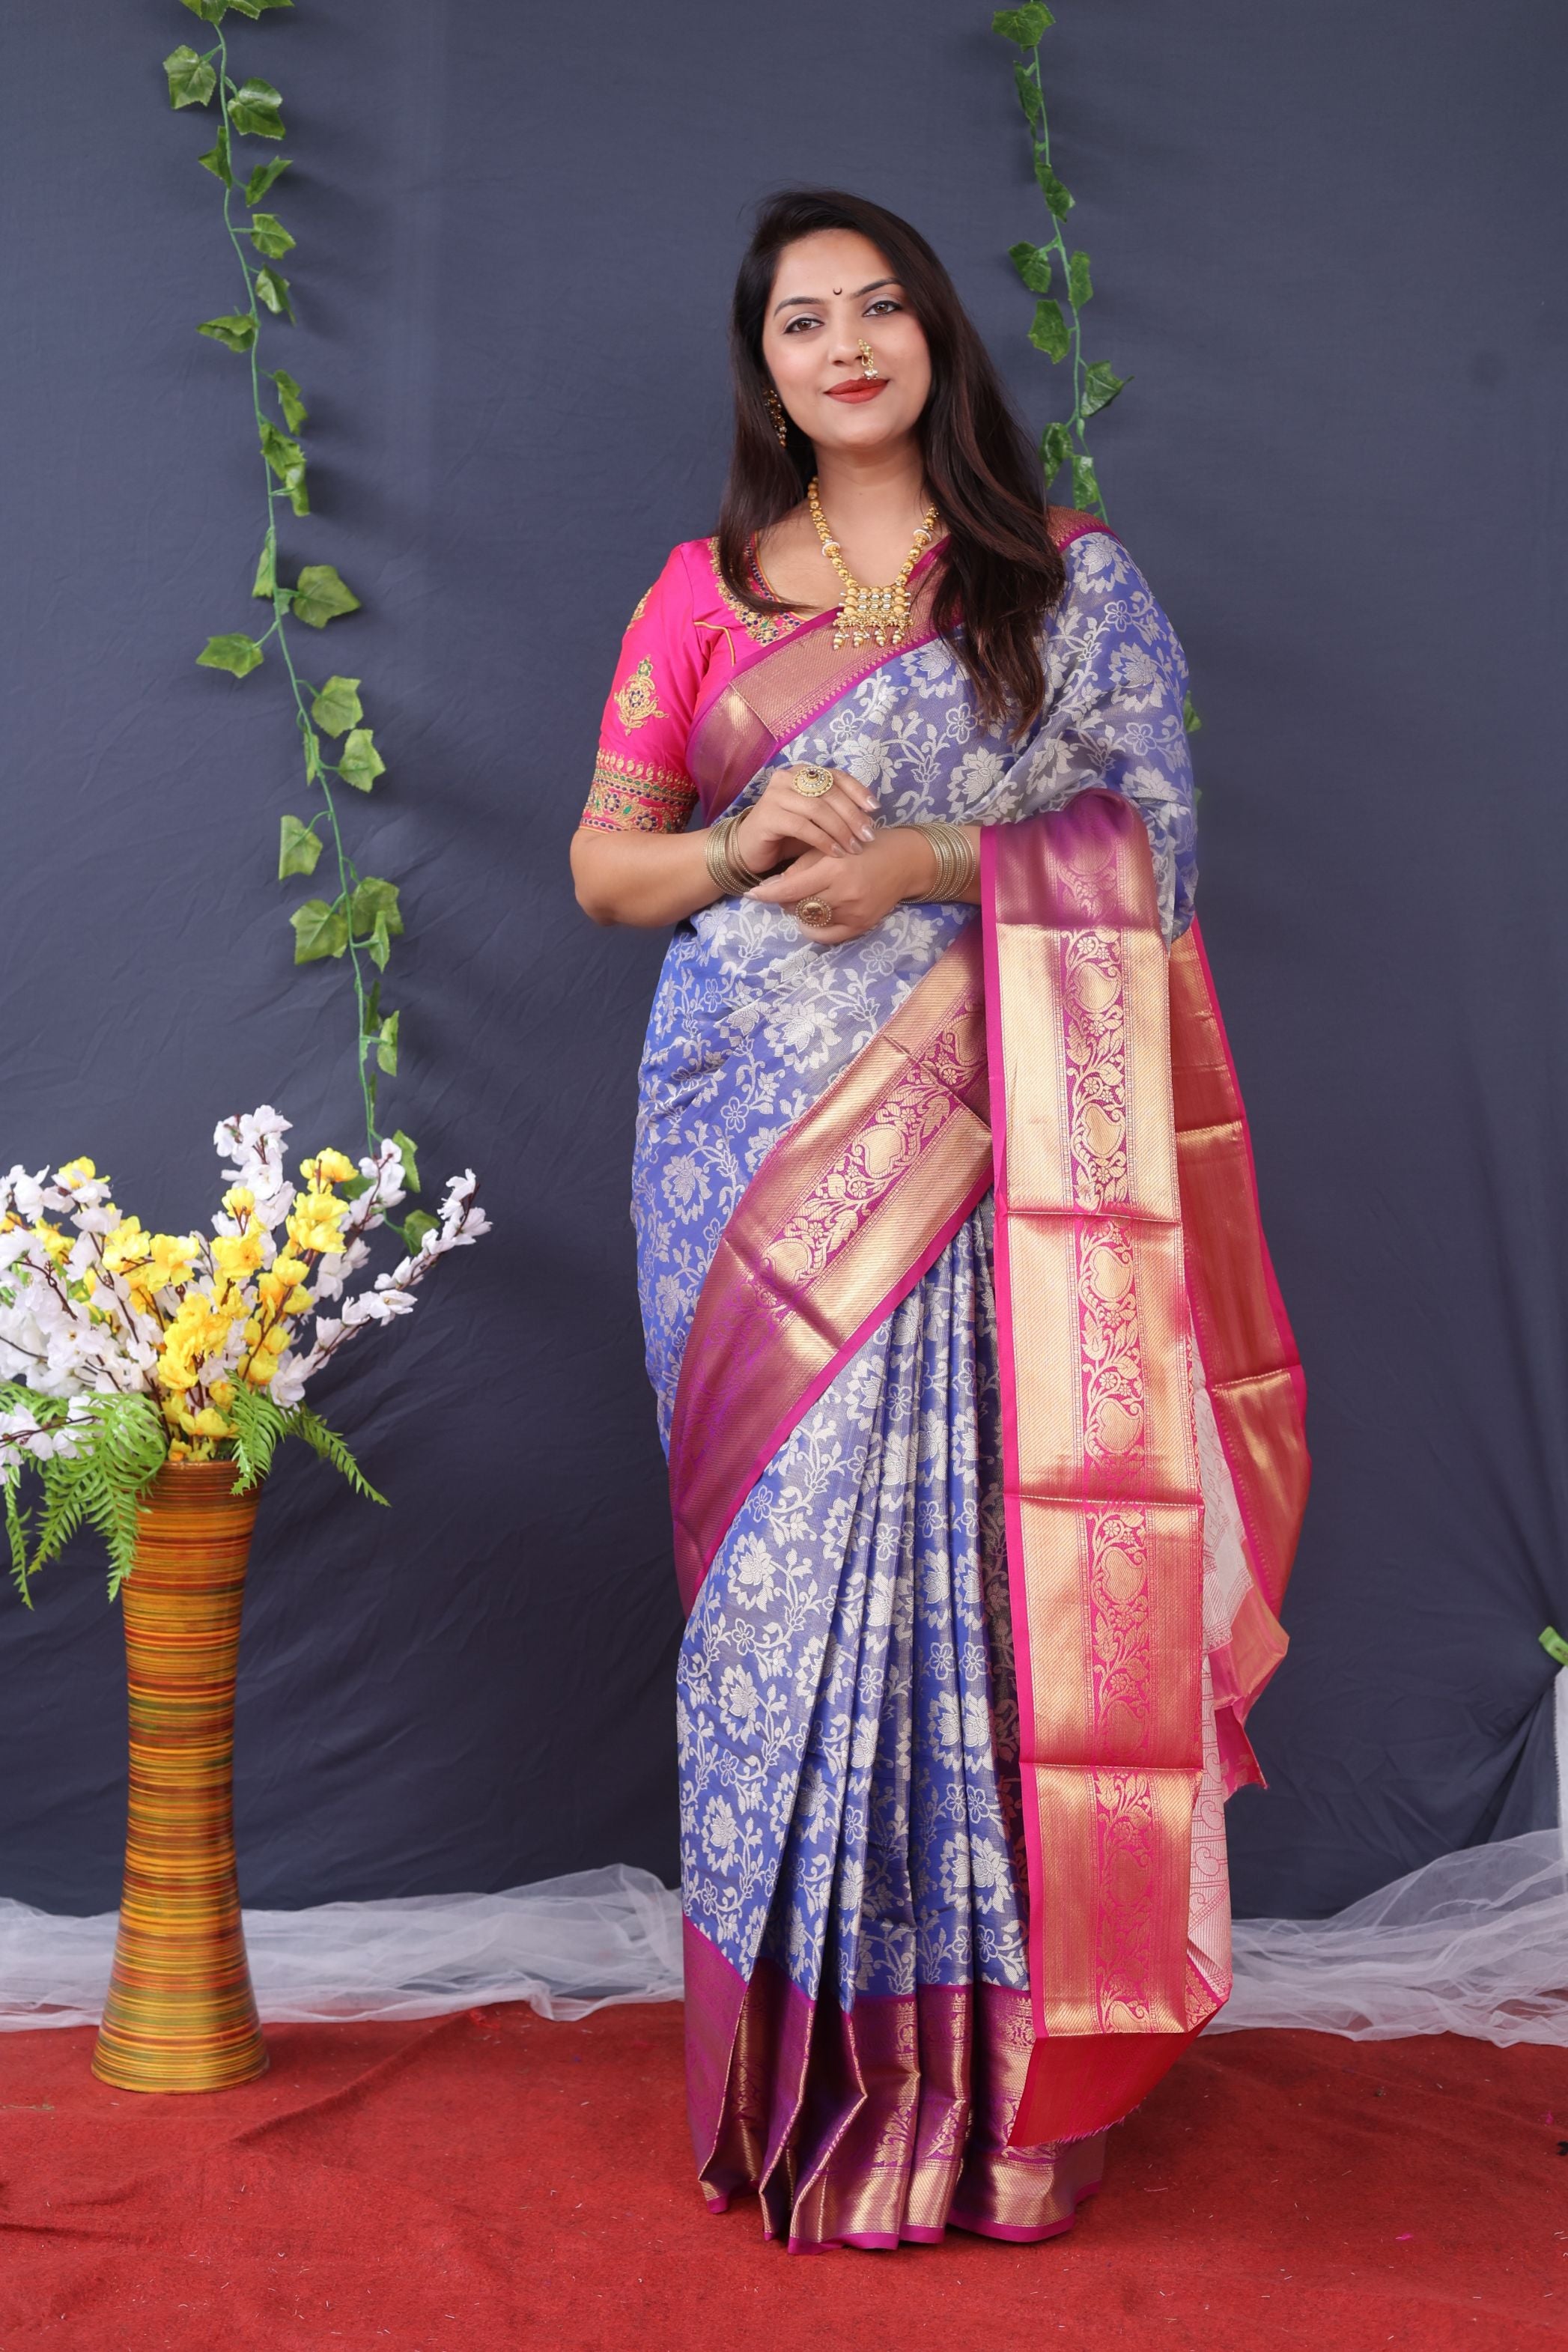 Royal Blue Color Tissue Kanchipuram Saree Gorgeous Flower Design Body and Pallu